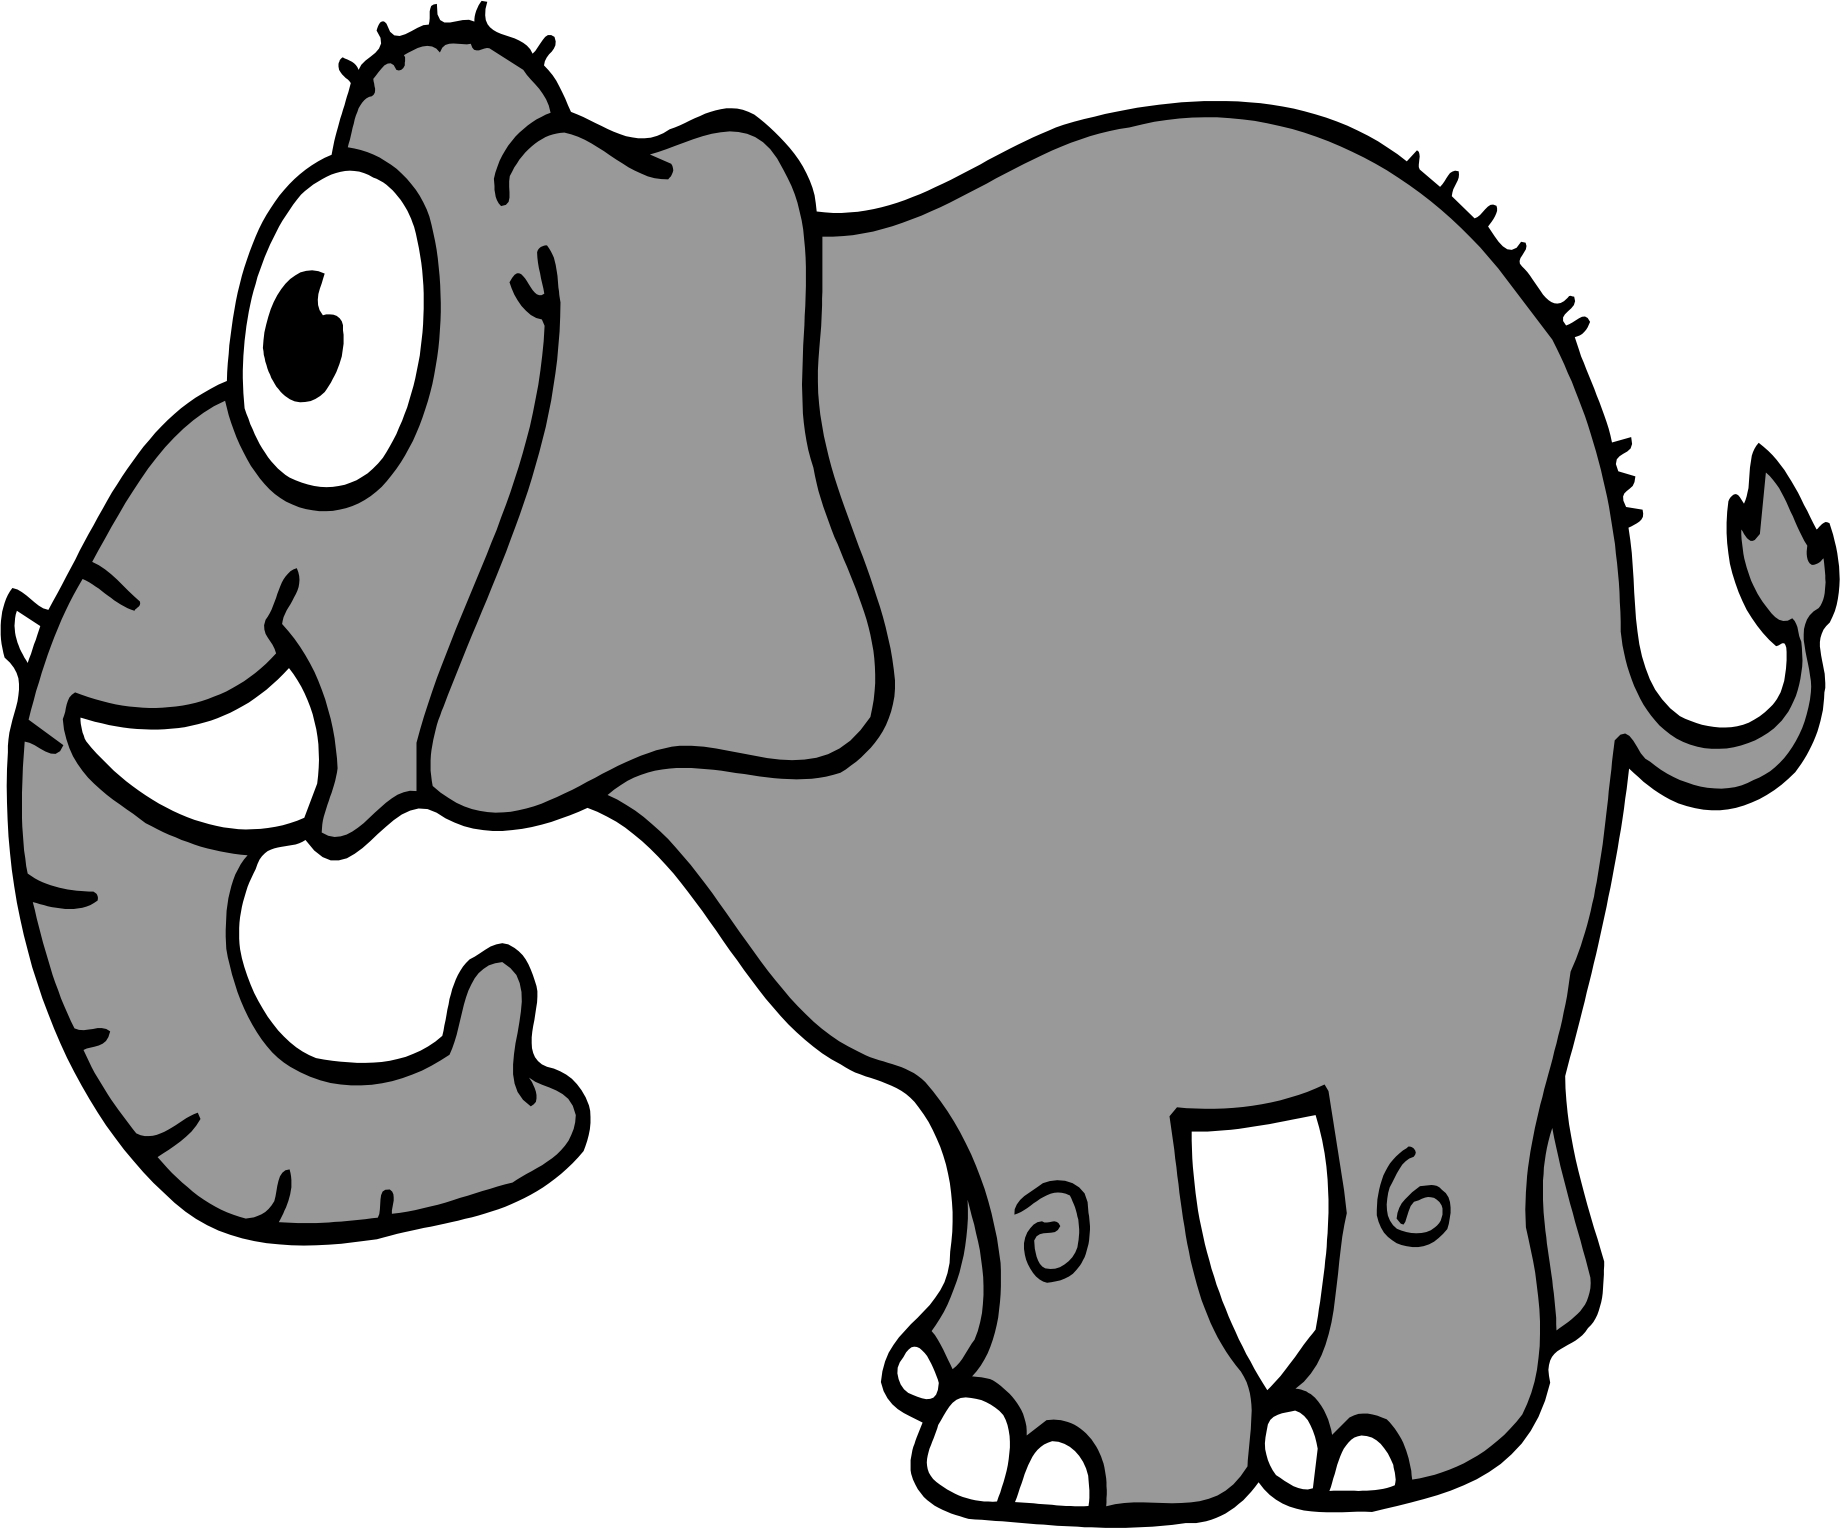 Funny-Elephant-cartoon-12 - Animals Planent.